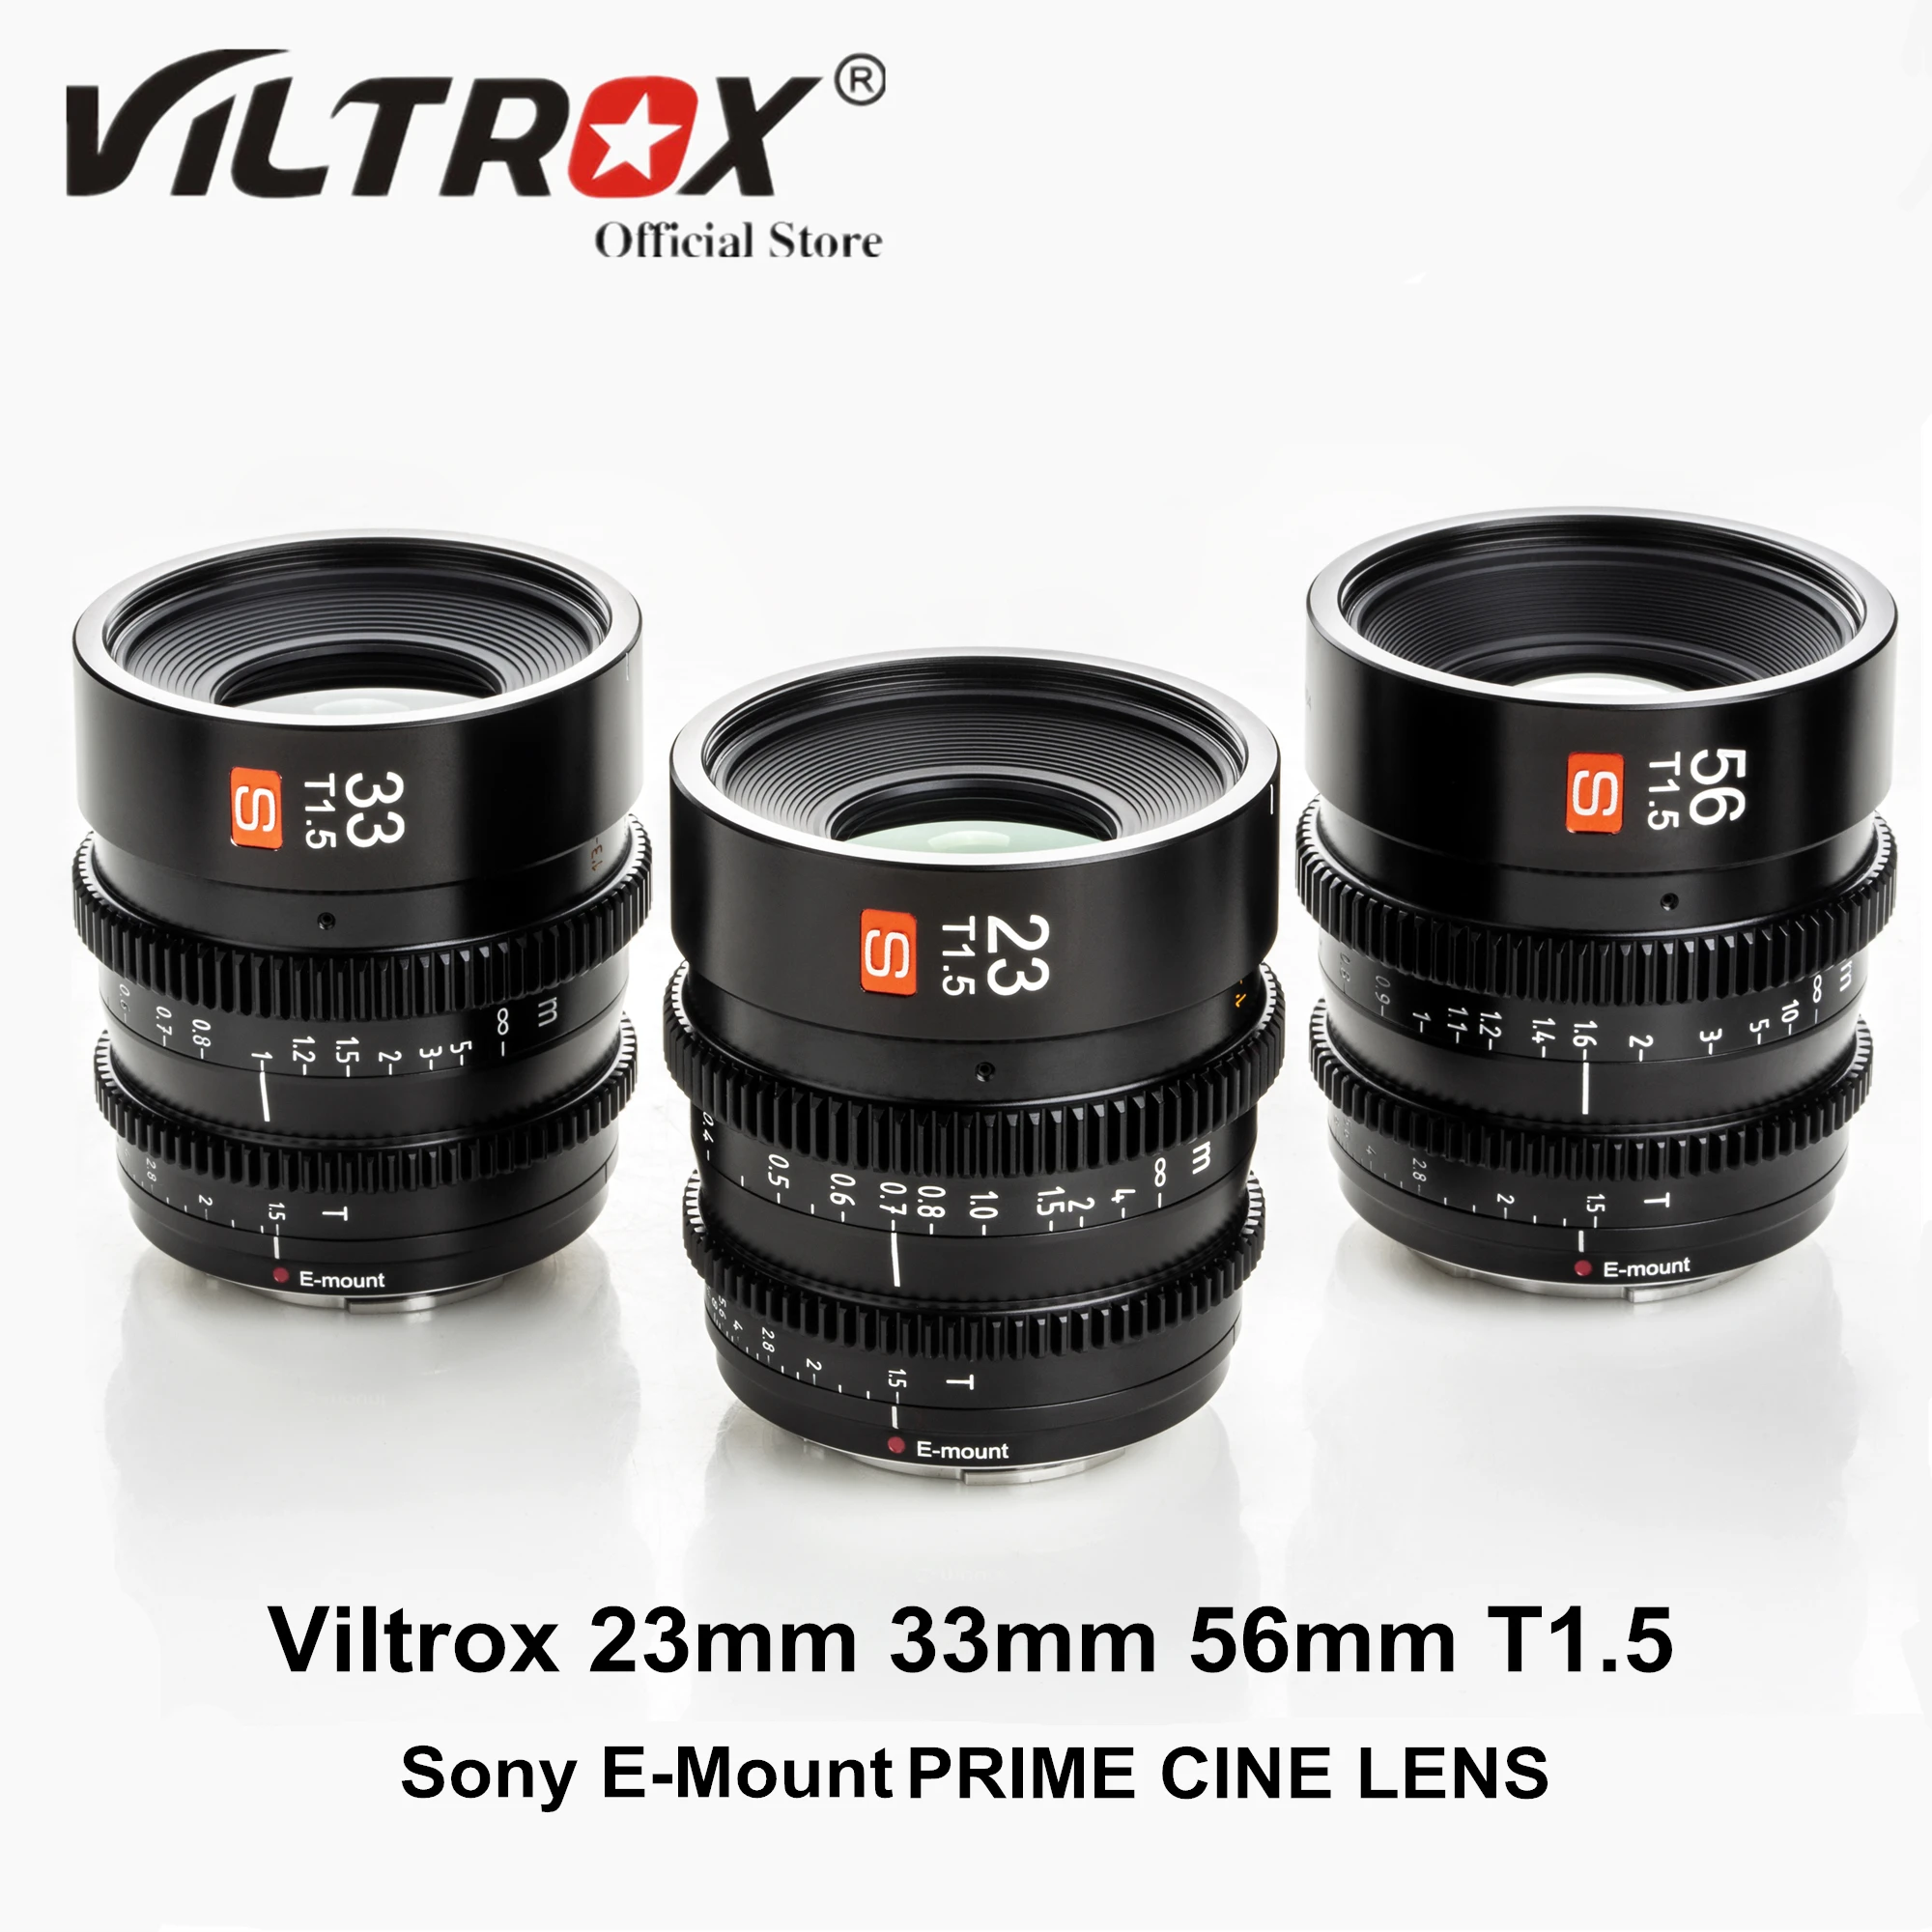 

Viltrox 23mm33mm56mm T1.5 Professional Cine Lens Compact Solid Lens Build Designed for Filmmaking Sony Lens E Mount Camera Lens